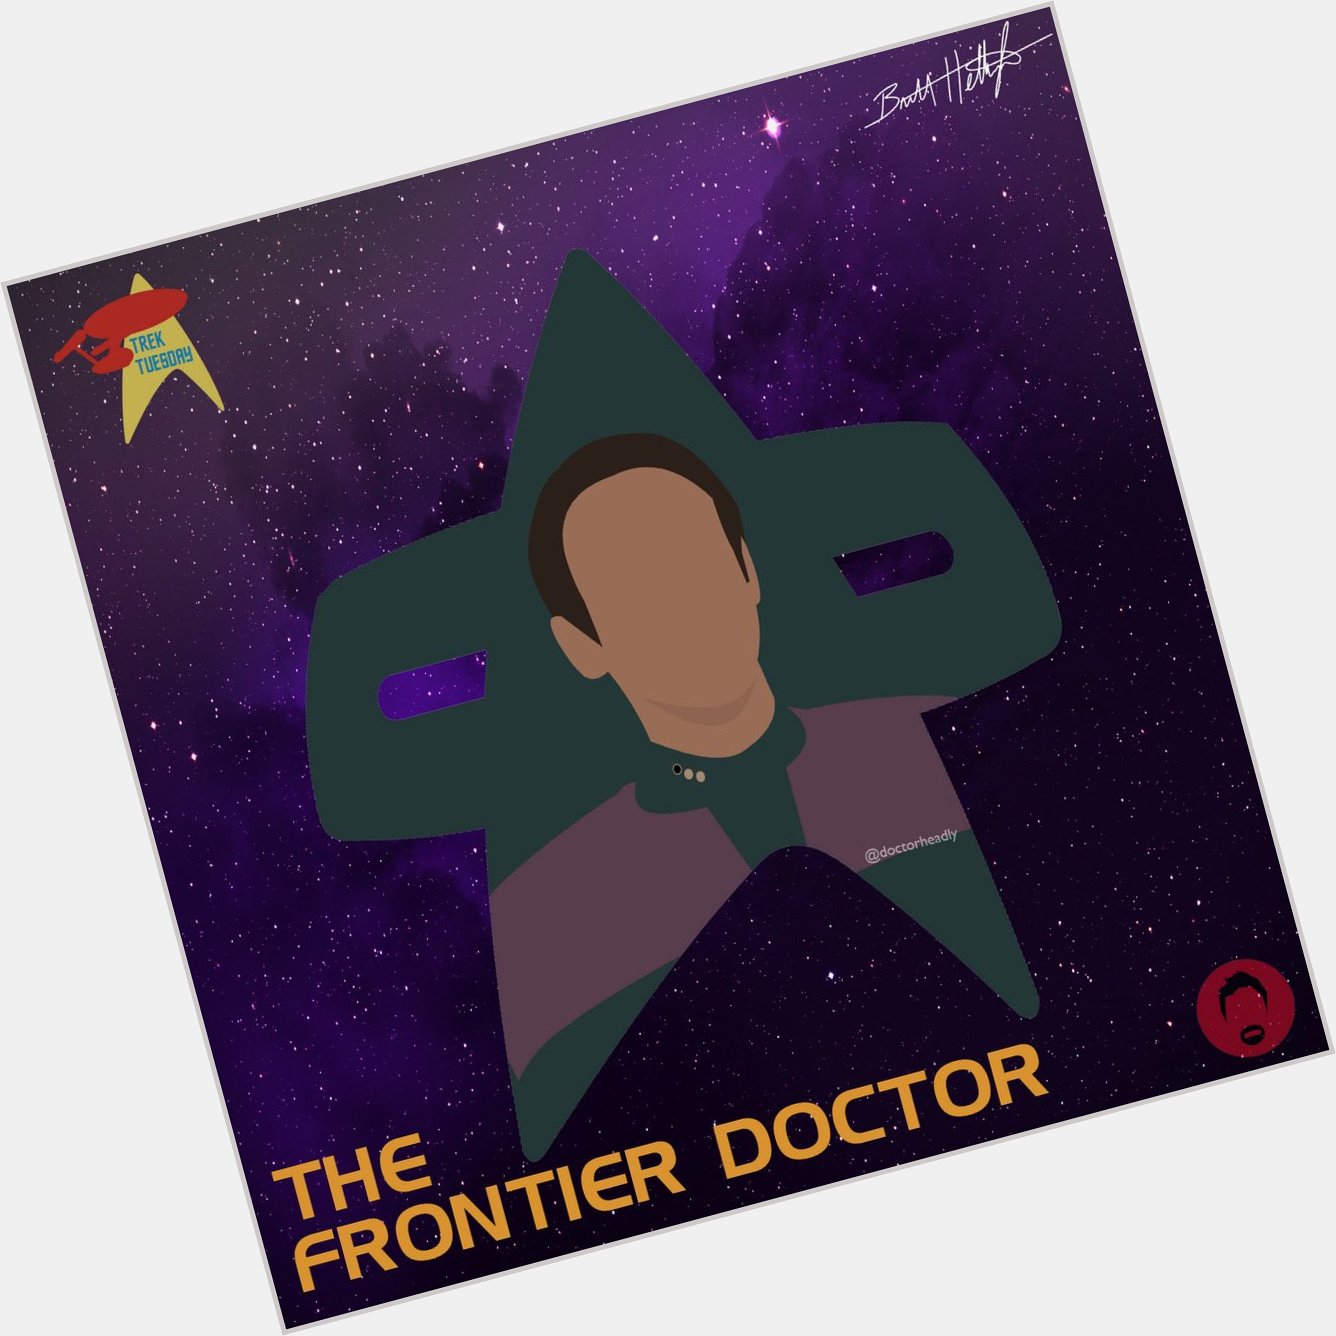 Happy birthday to one of Starfleet s finest medical minds, Alexander Siddig! 